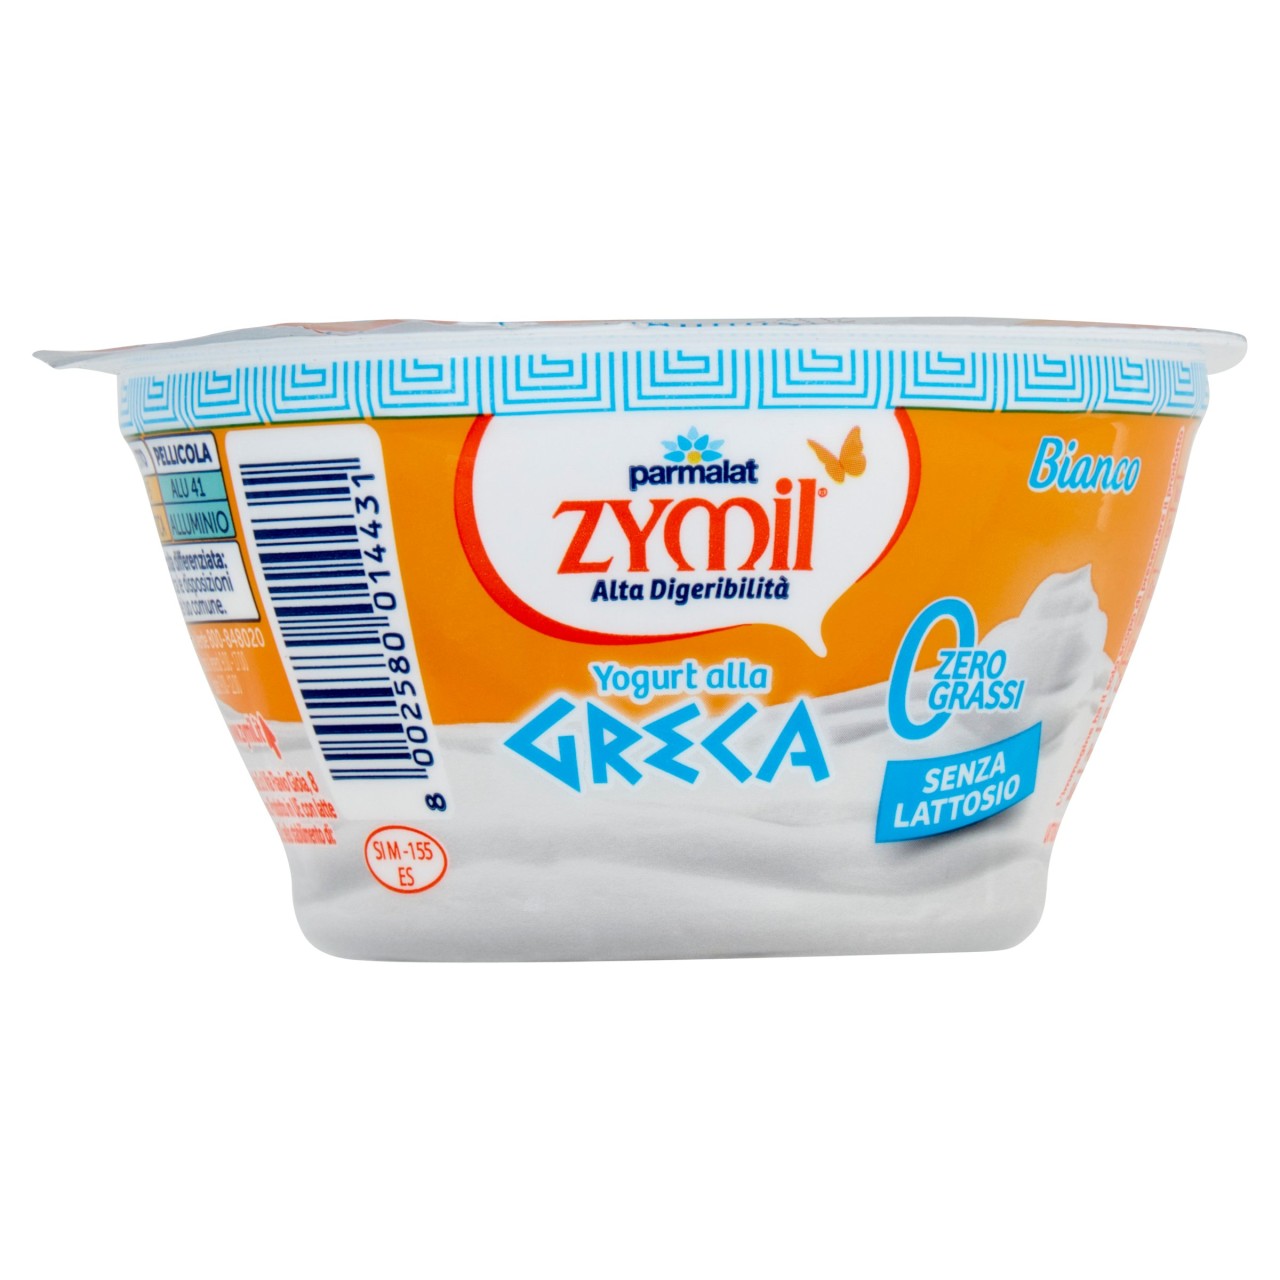 ZYMIL Alta Digeribilità Senza Lattosio Yogurt alla Greca Zero Grassi Bianco  150 g - Dispensa - Supermercati Gecop